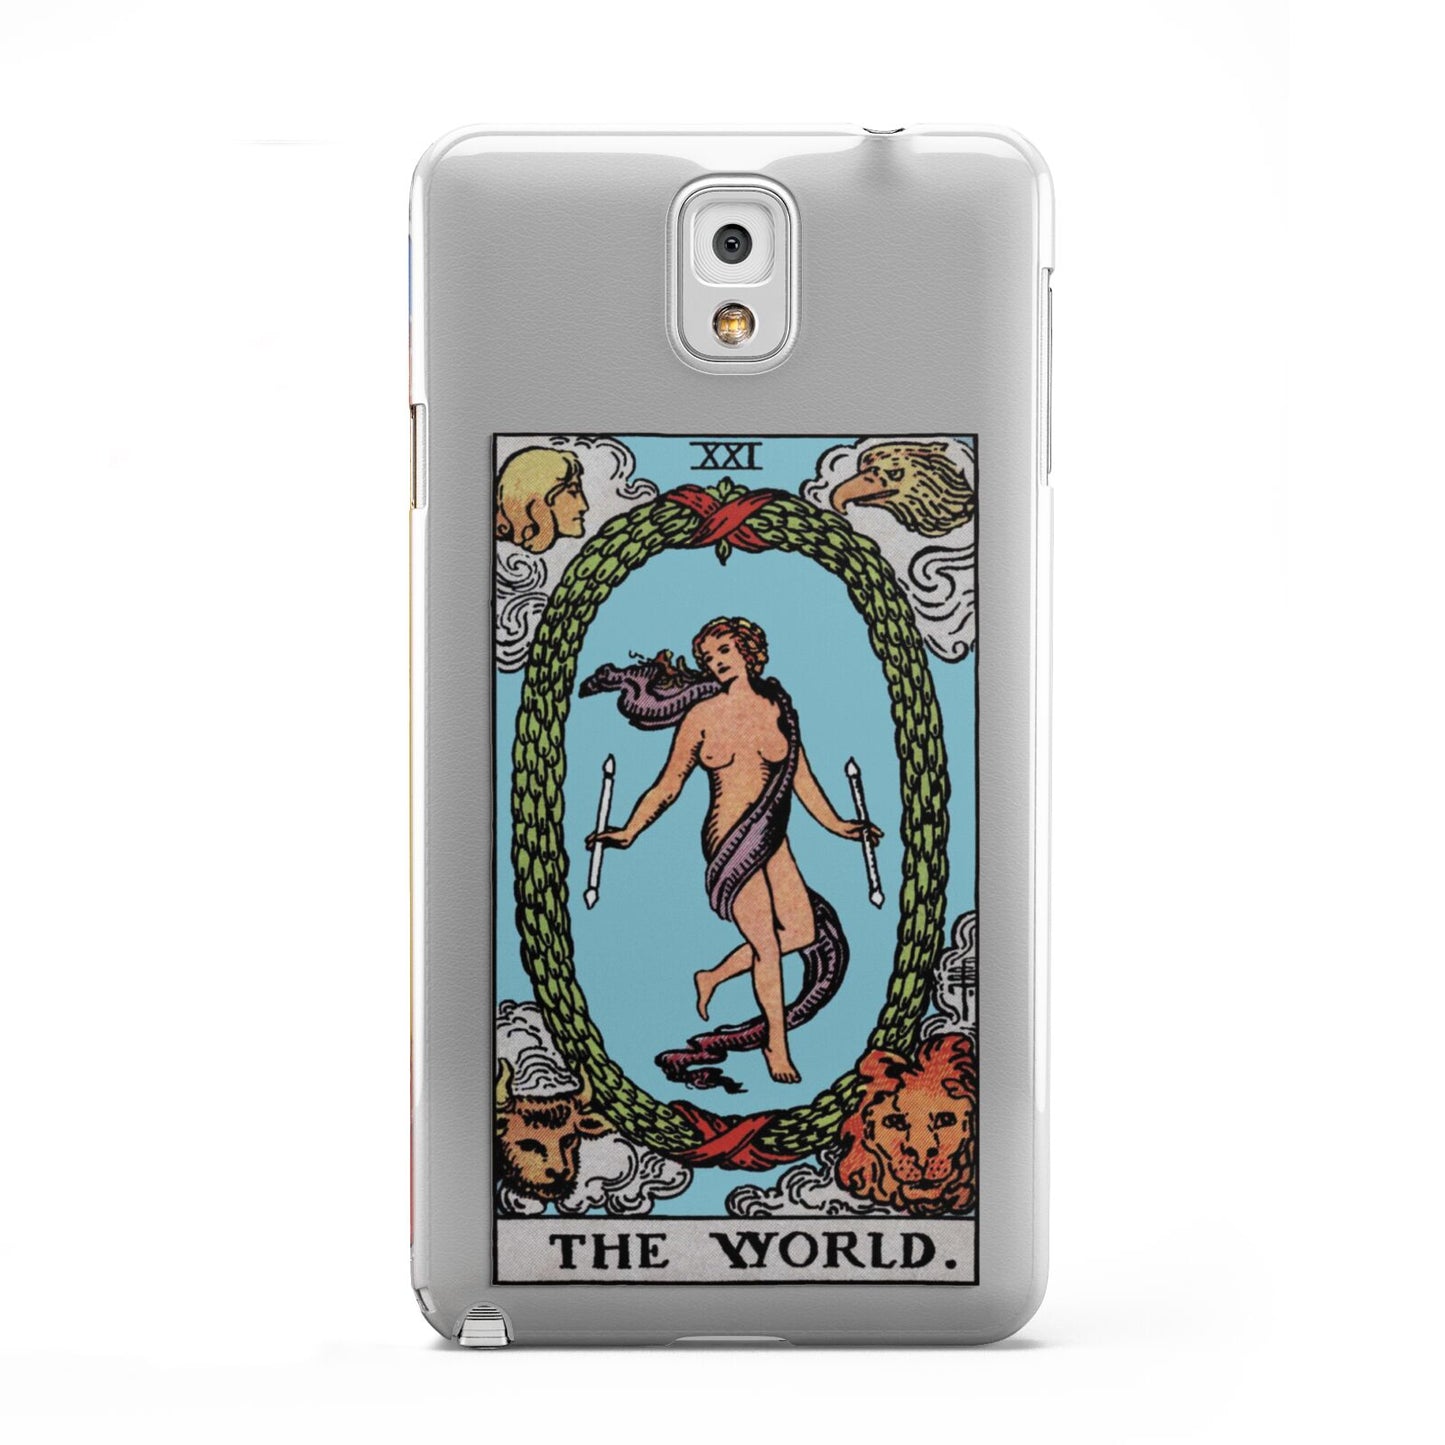 The World Tarot Card Samsung Galaxy Note 3 Case